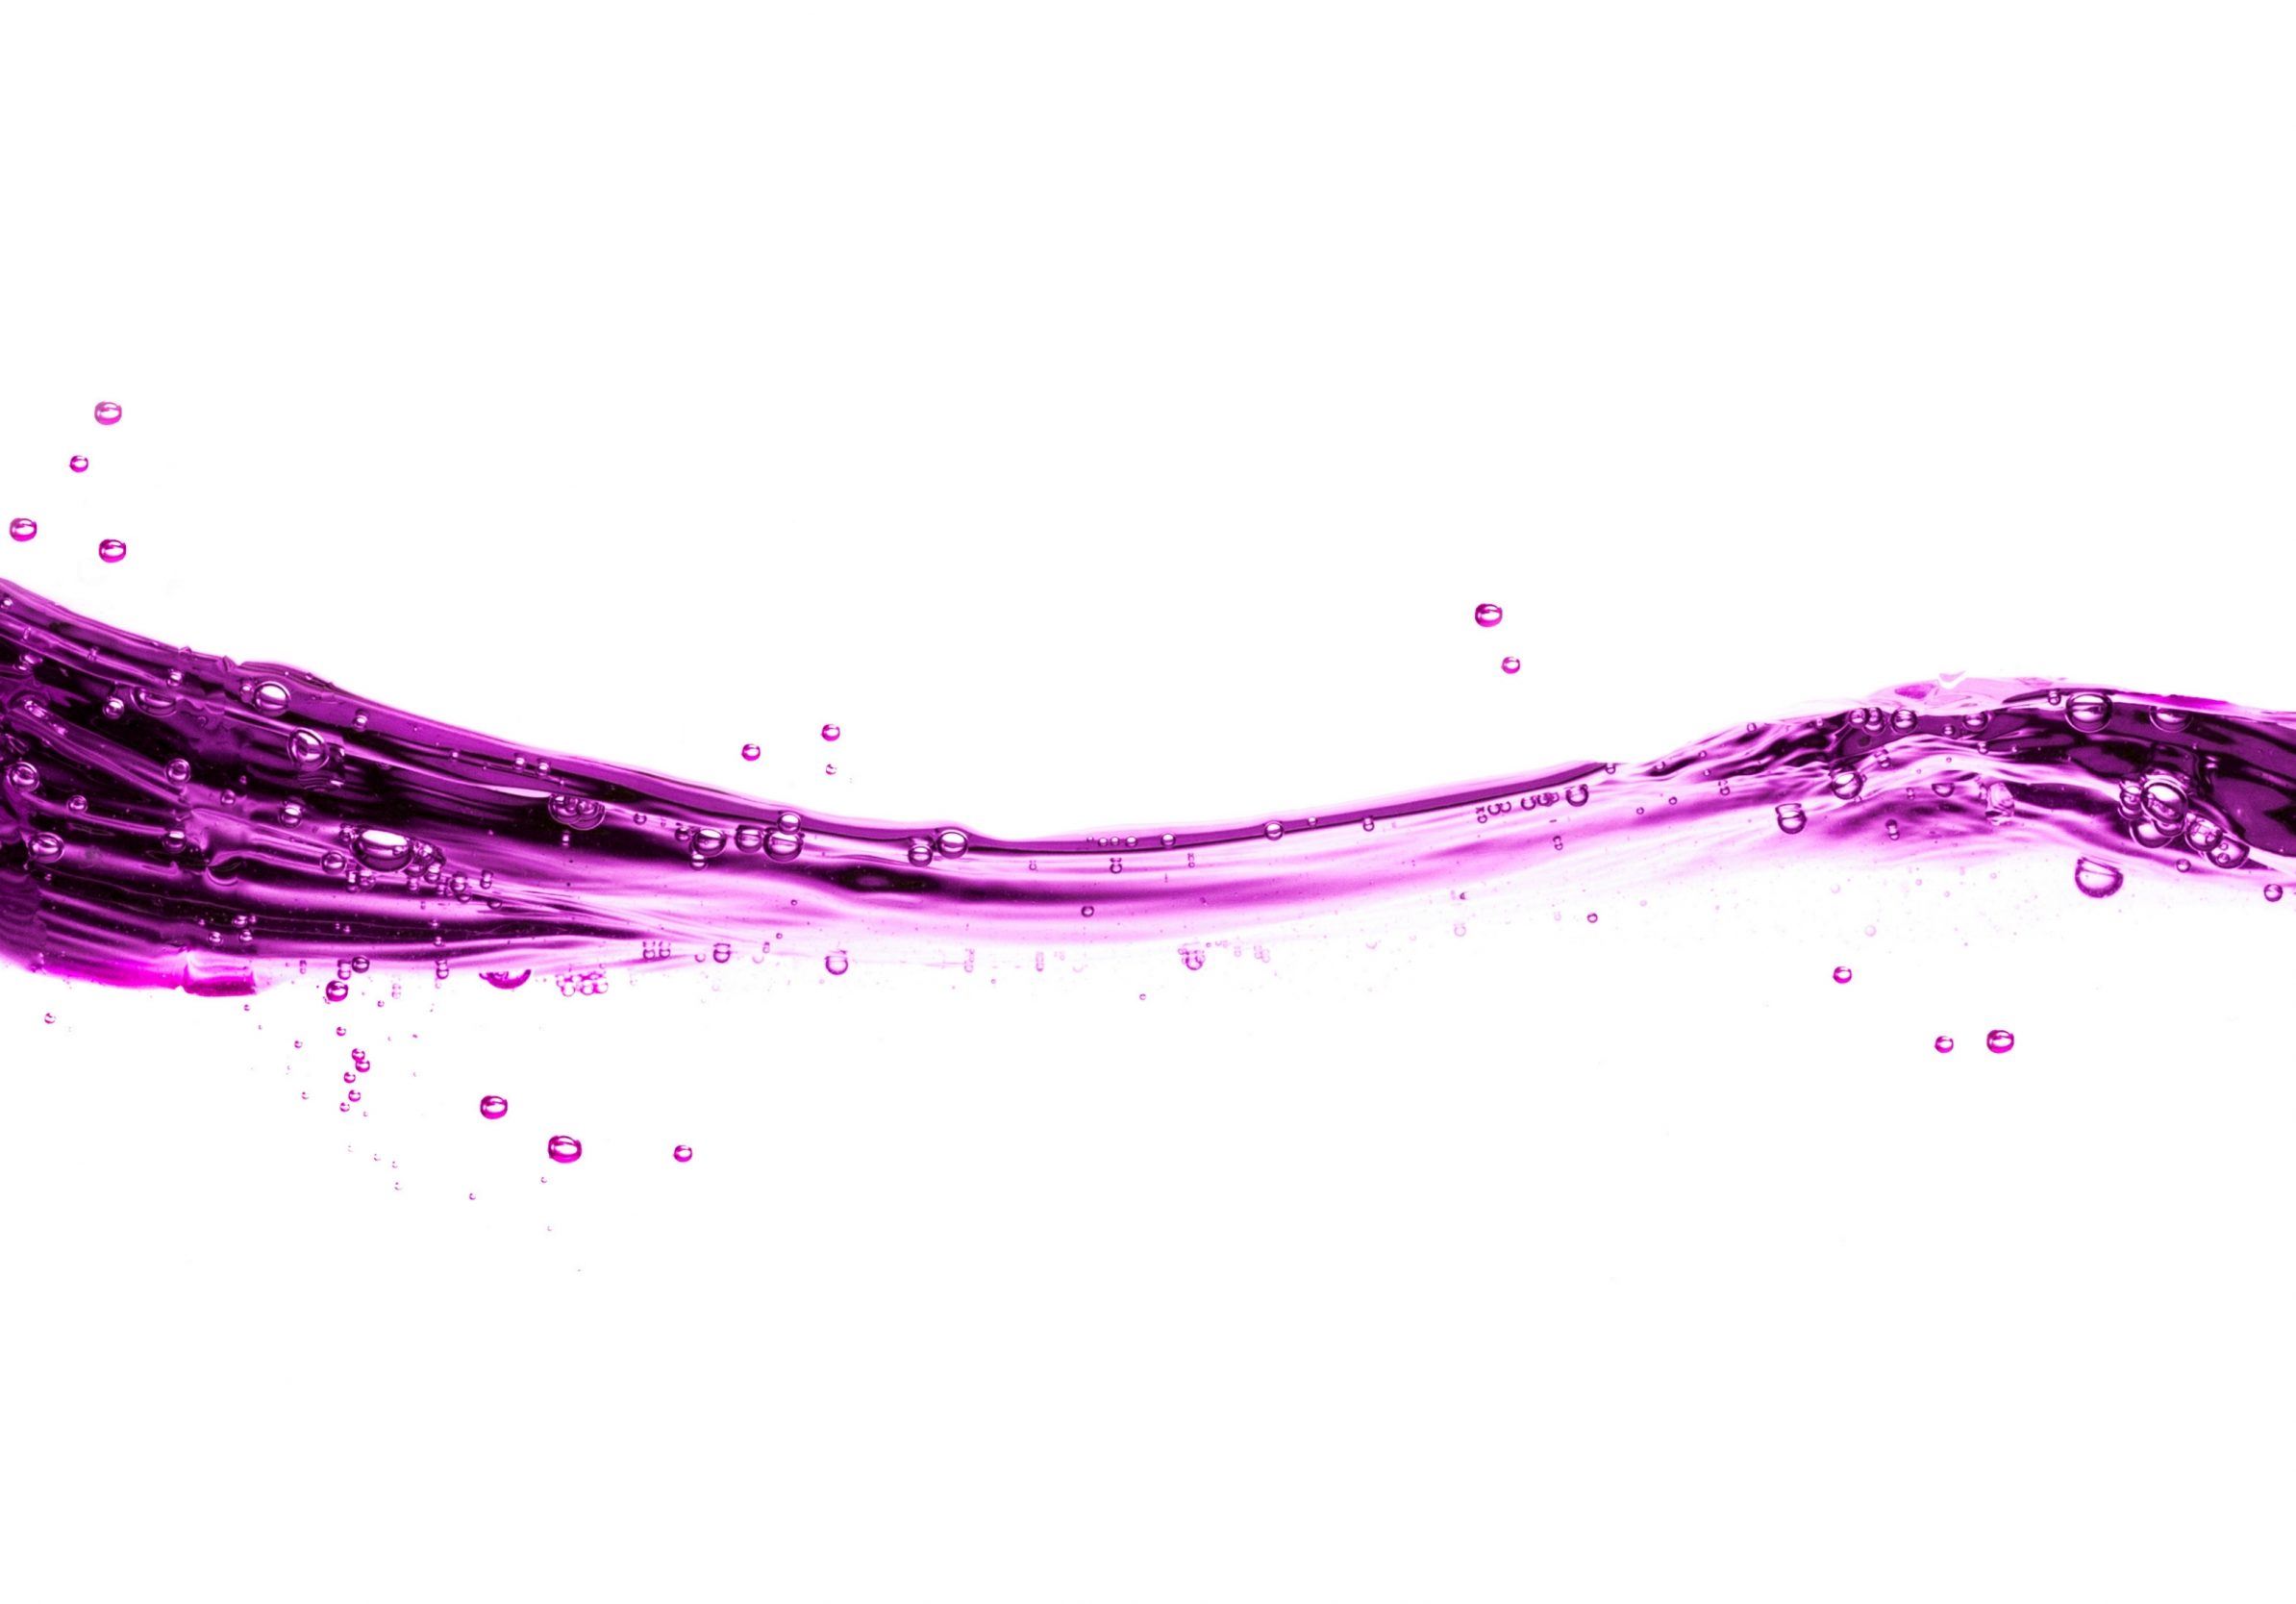 2388x1668 iPad Pro wallpapers Purple Water Splash White Background iPad Wallpaper 2388x1668 pixels resolution